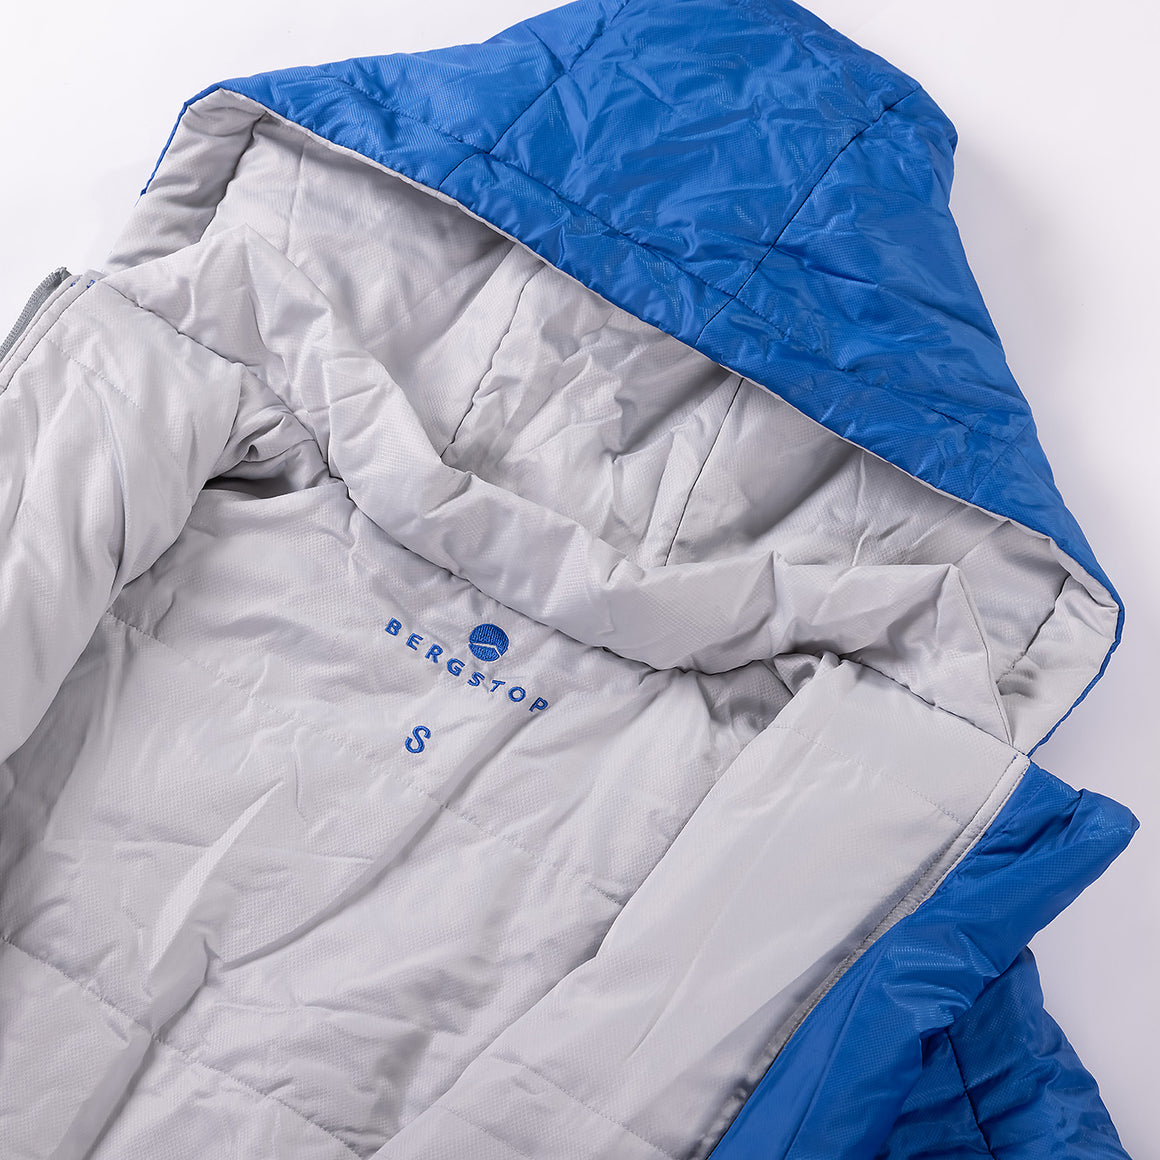 Cozybag Wilderness - the ideal 3 season sleeping bag